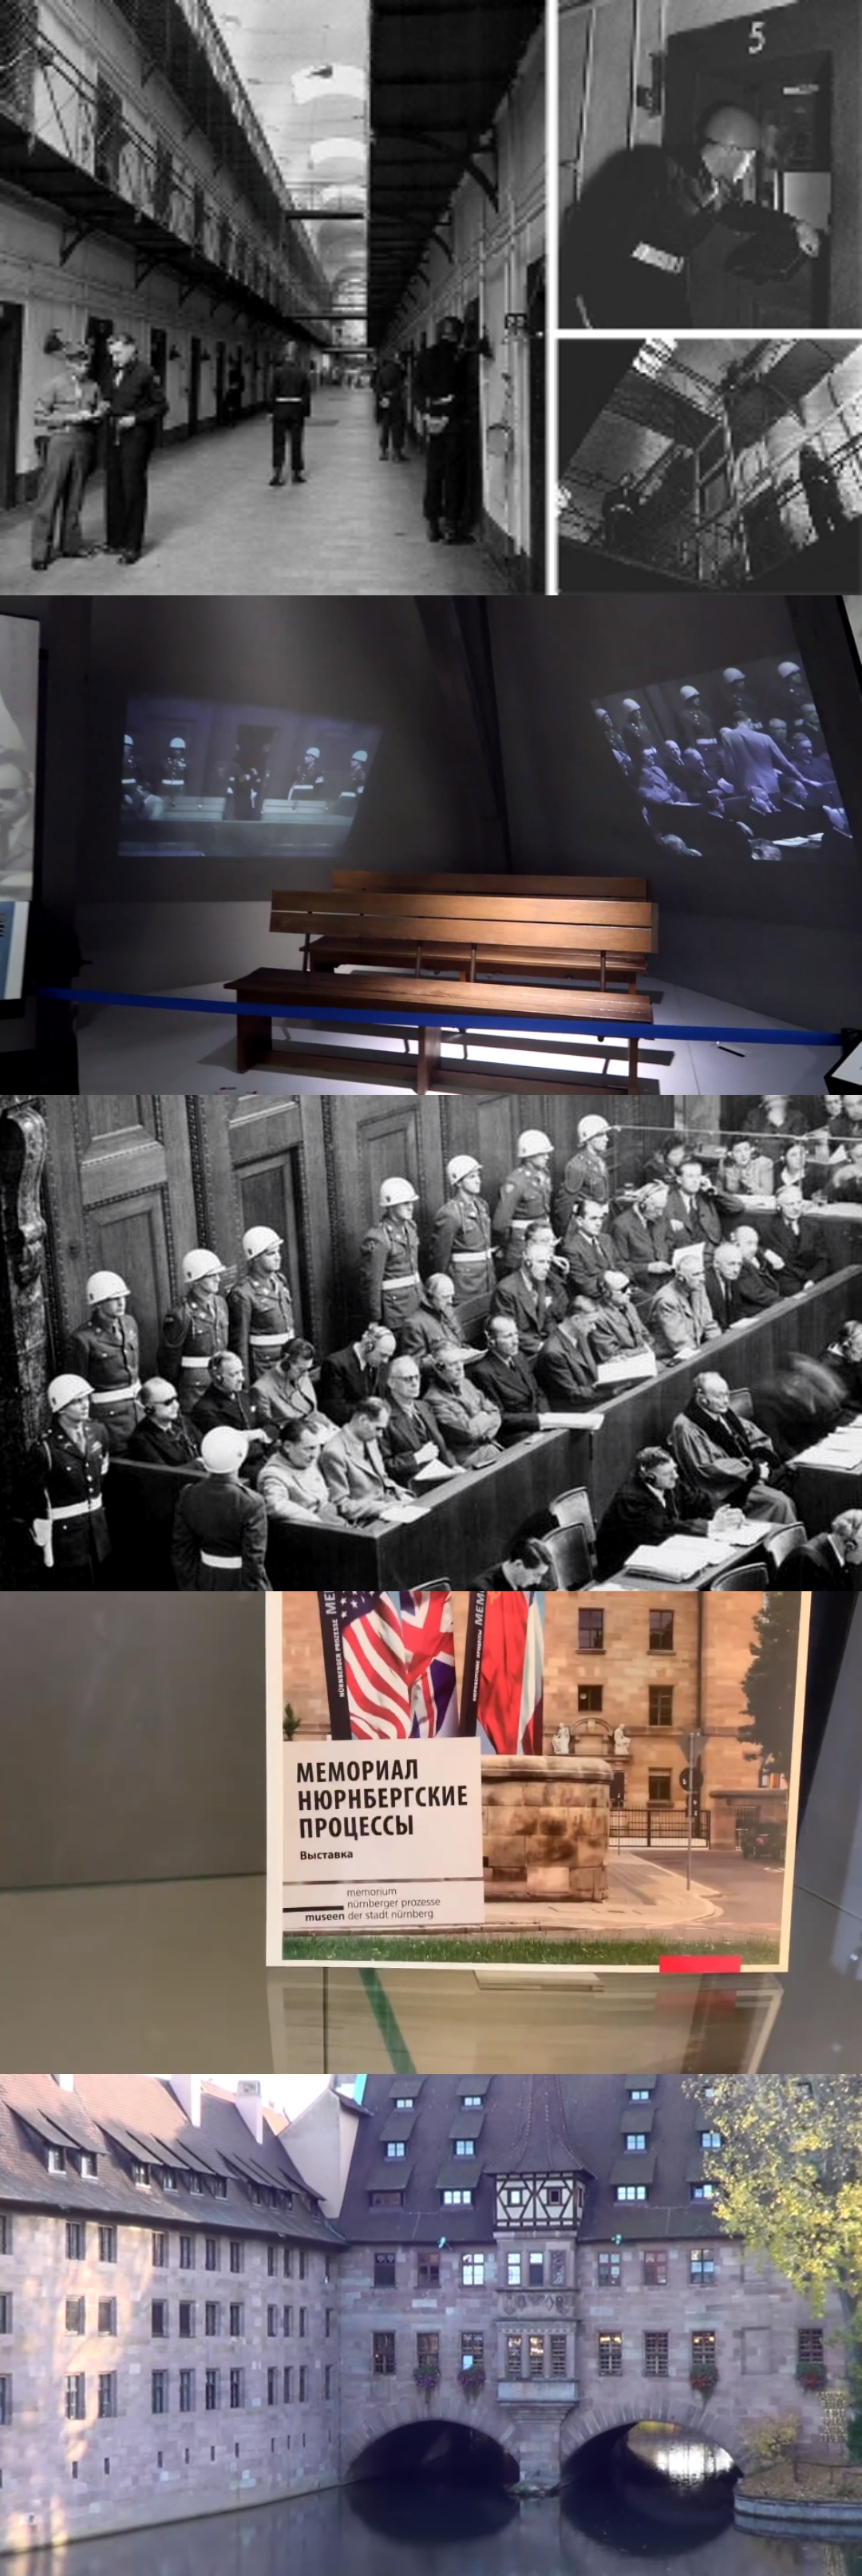 Нюрнбергский процесс: 76 лет назад начался суд справедливости